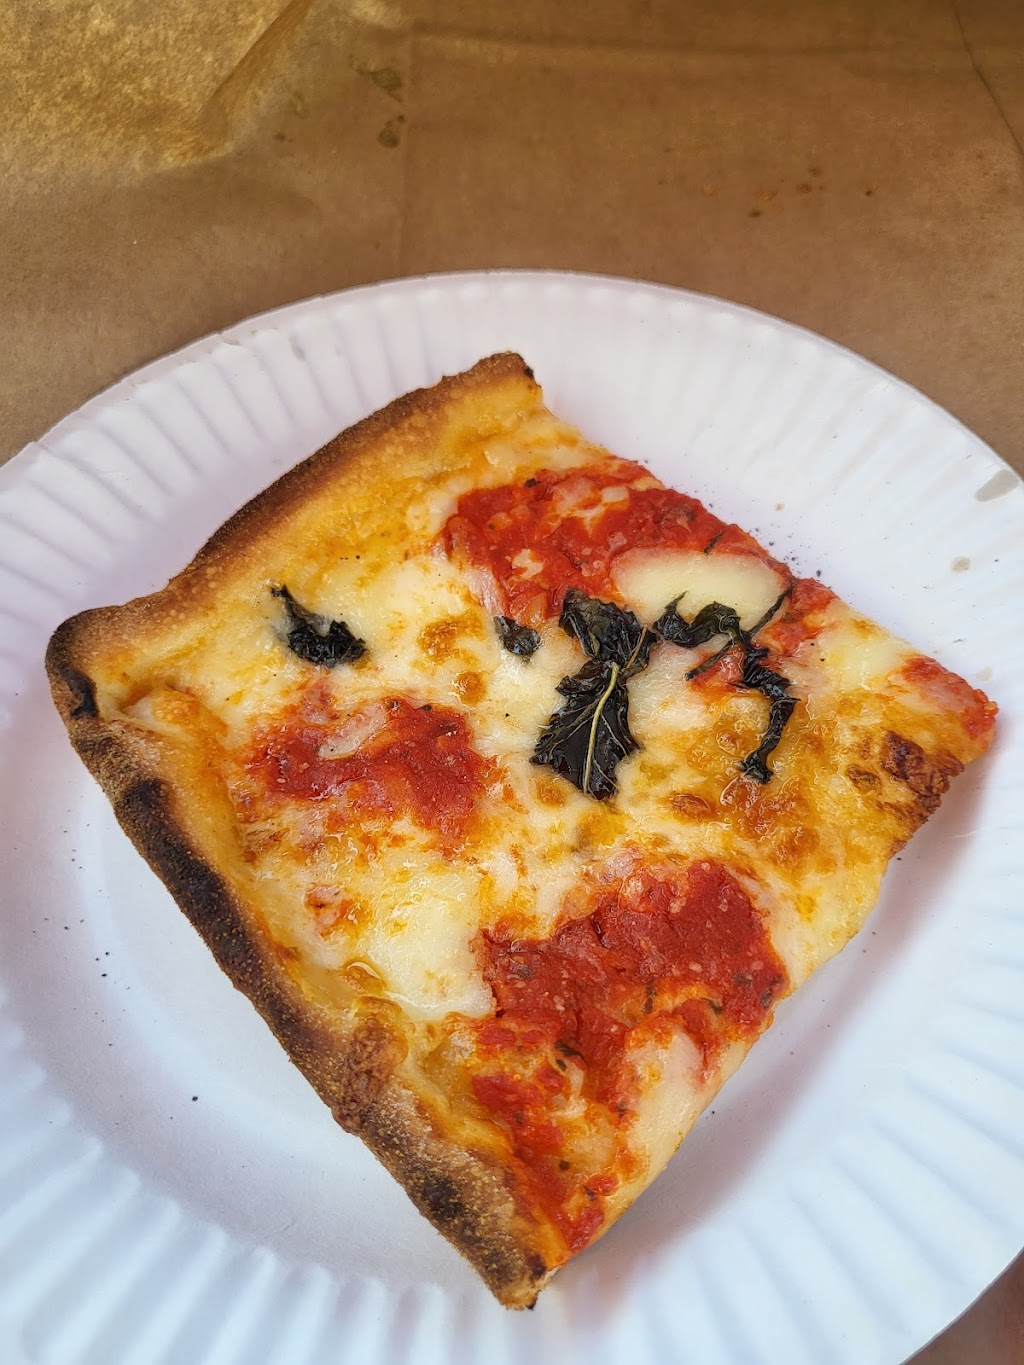 Chianti Wood Fired Pizza Italian Cuisine | 159 Morristown Rd, Bernardsville, NJ 07924 | Phone: (908) 977-1700